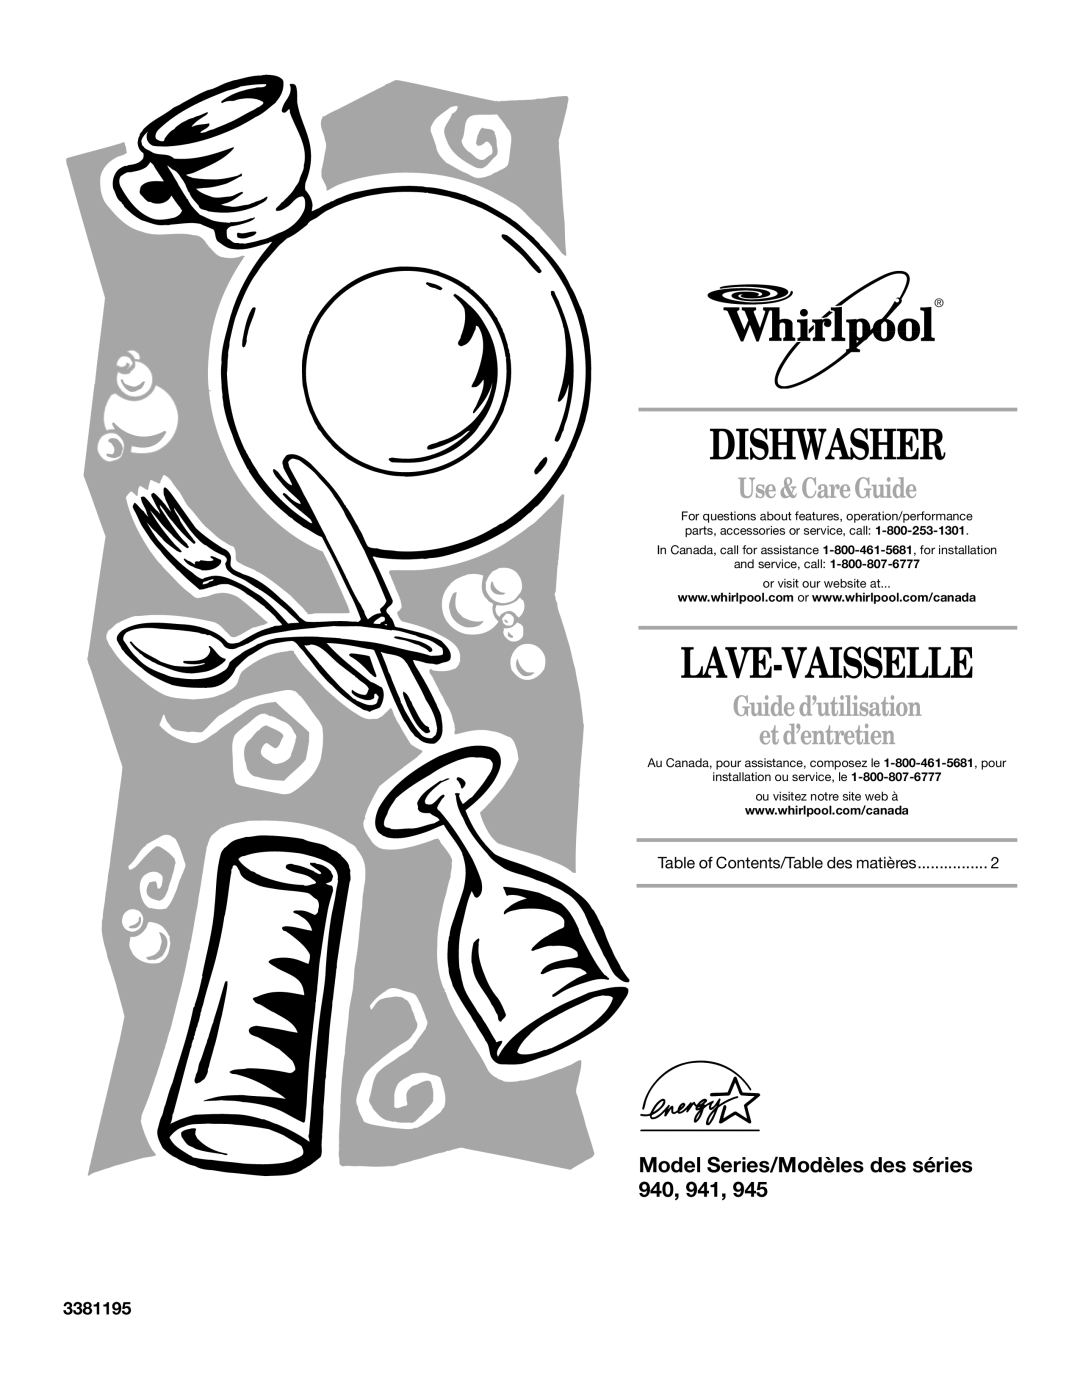 Whirlpool 941, 945 manual Dishwasher, Lave-Vaisselle, Use & Care Guide, Guide d’utilisation et d’entretien, 3381195 